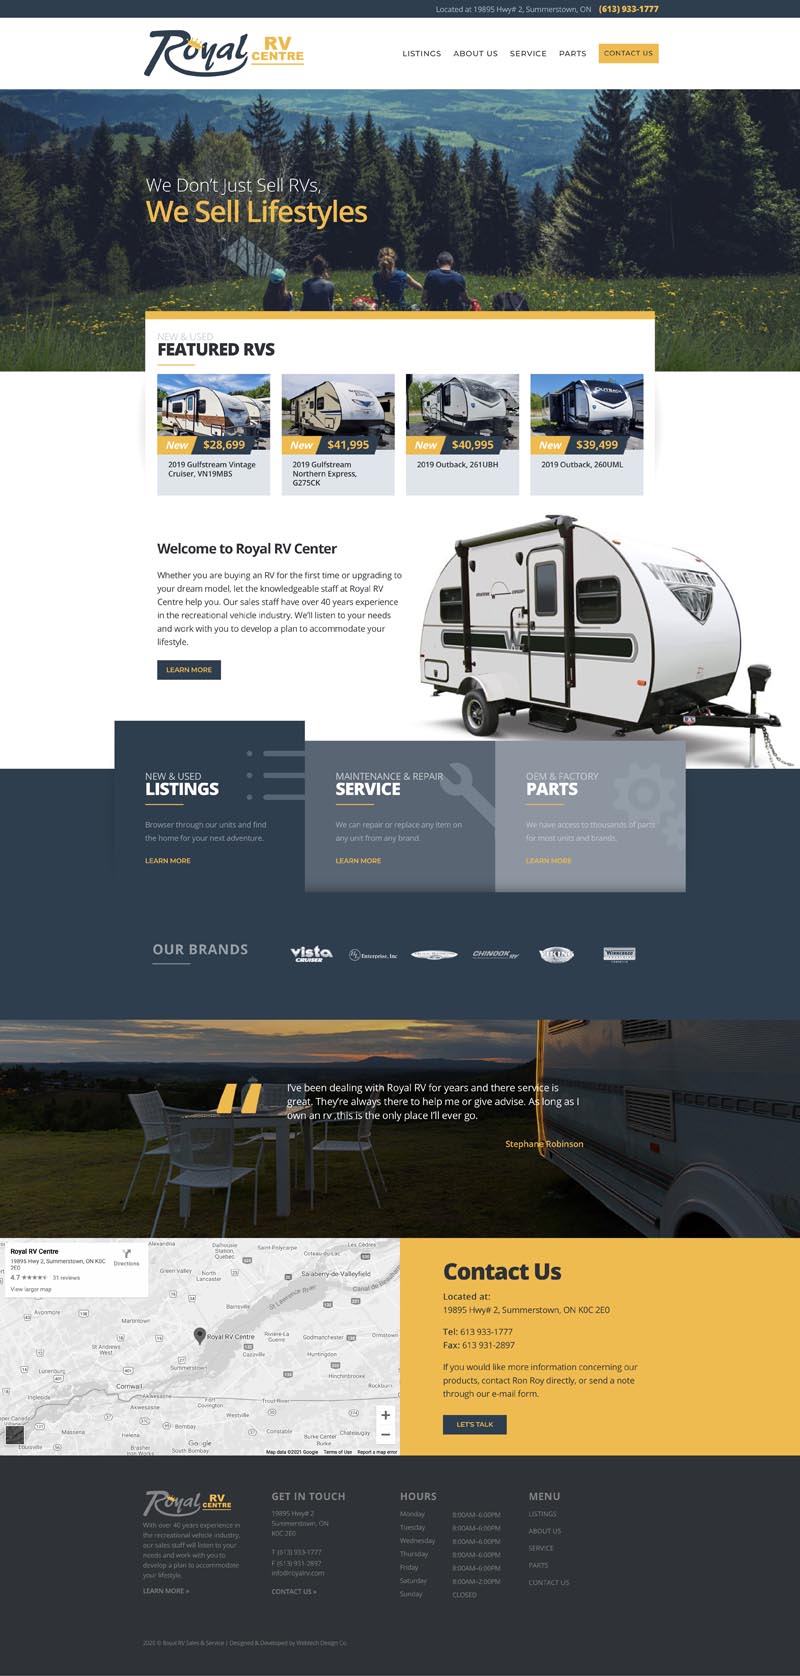 Cornwall web design for Royal RV website